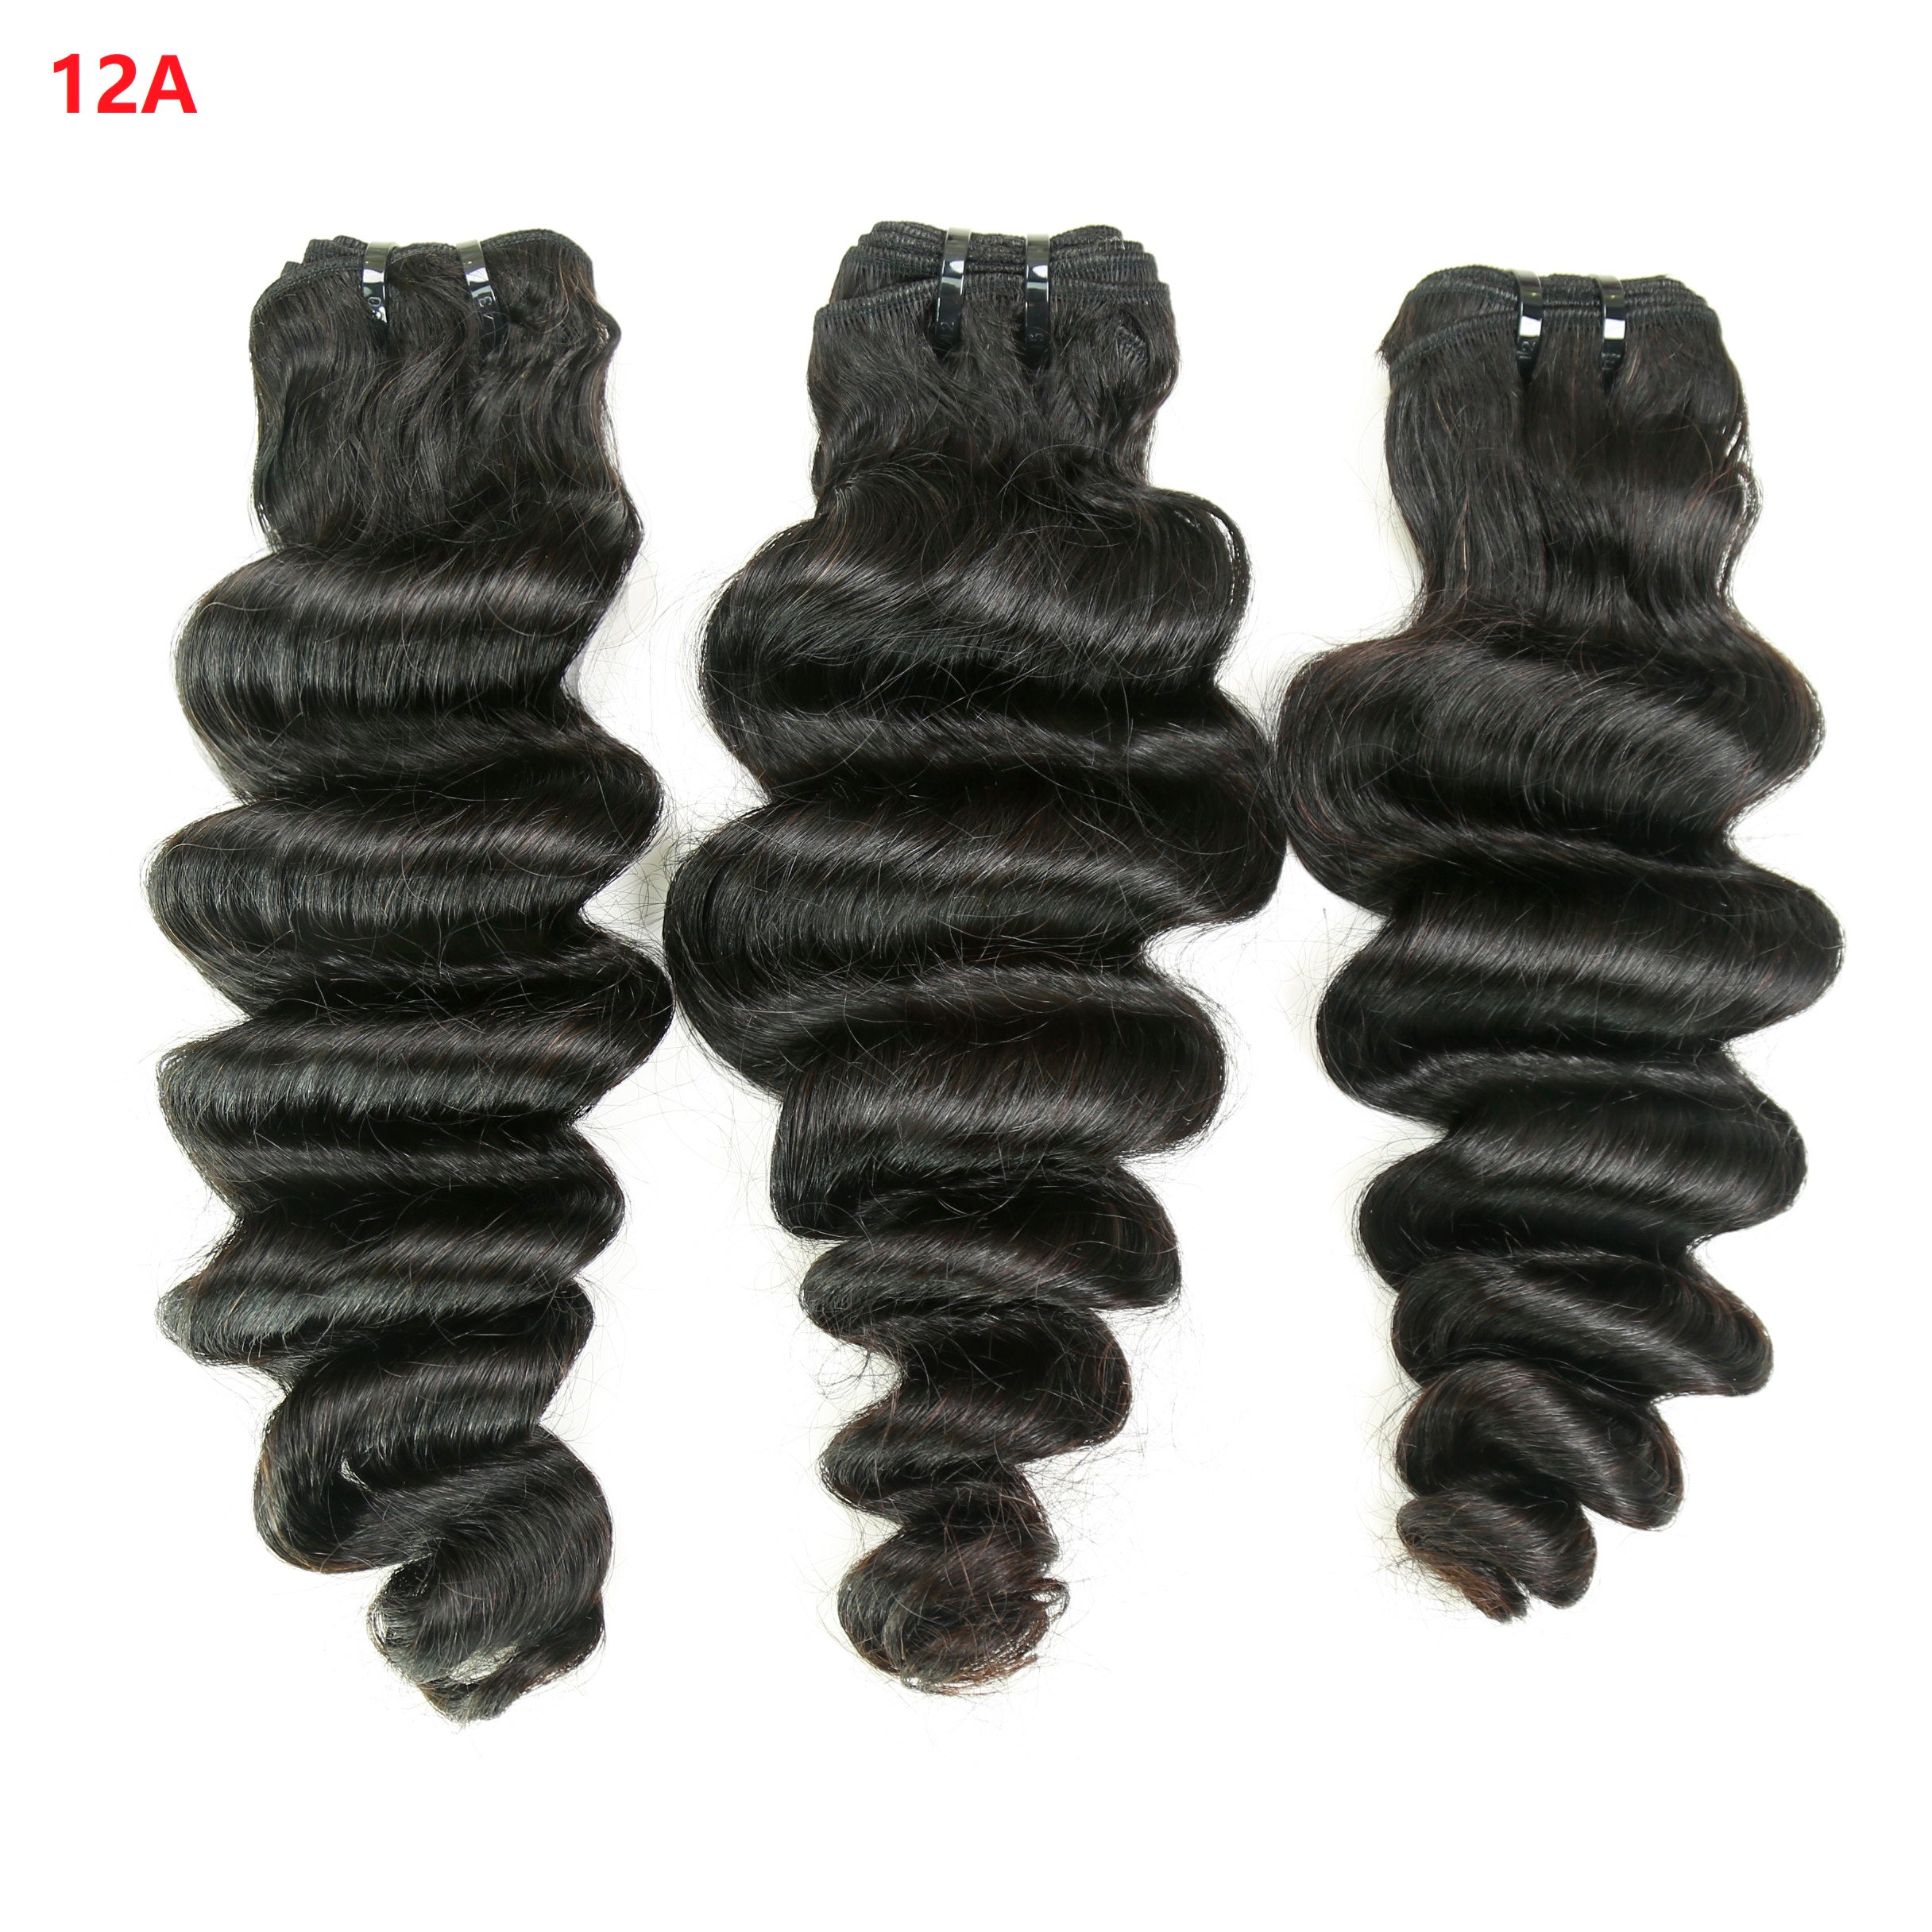 JP Hair 9A/10A/12A Loose Deep Human Hair 3 Bundles with 13x4 Lace Frontal